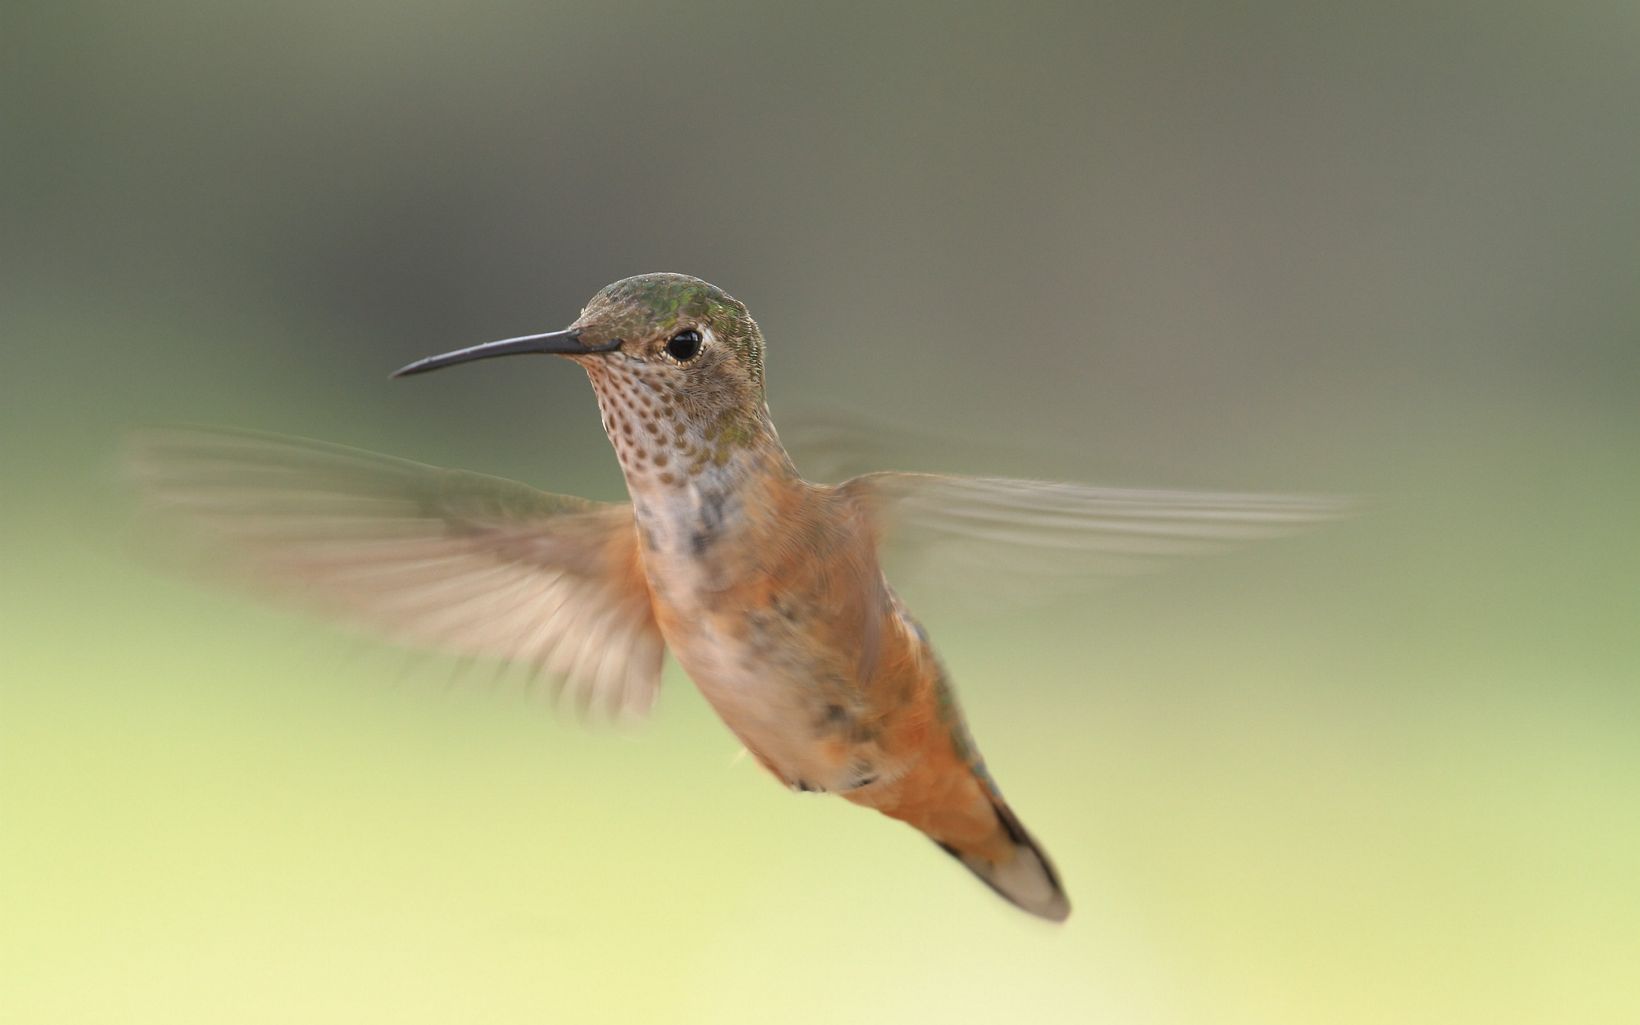 A juvenile hummingbird at Davis Mountains Preserve